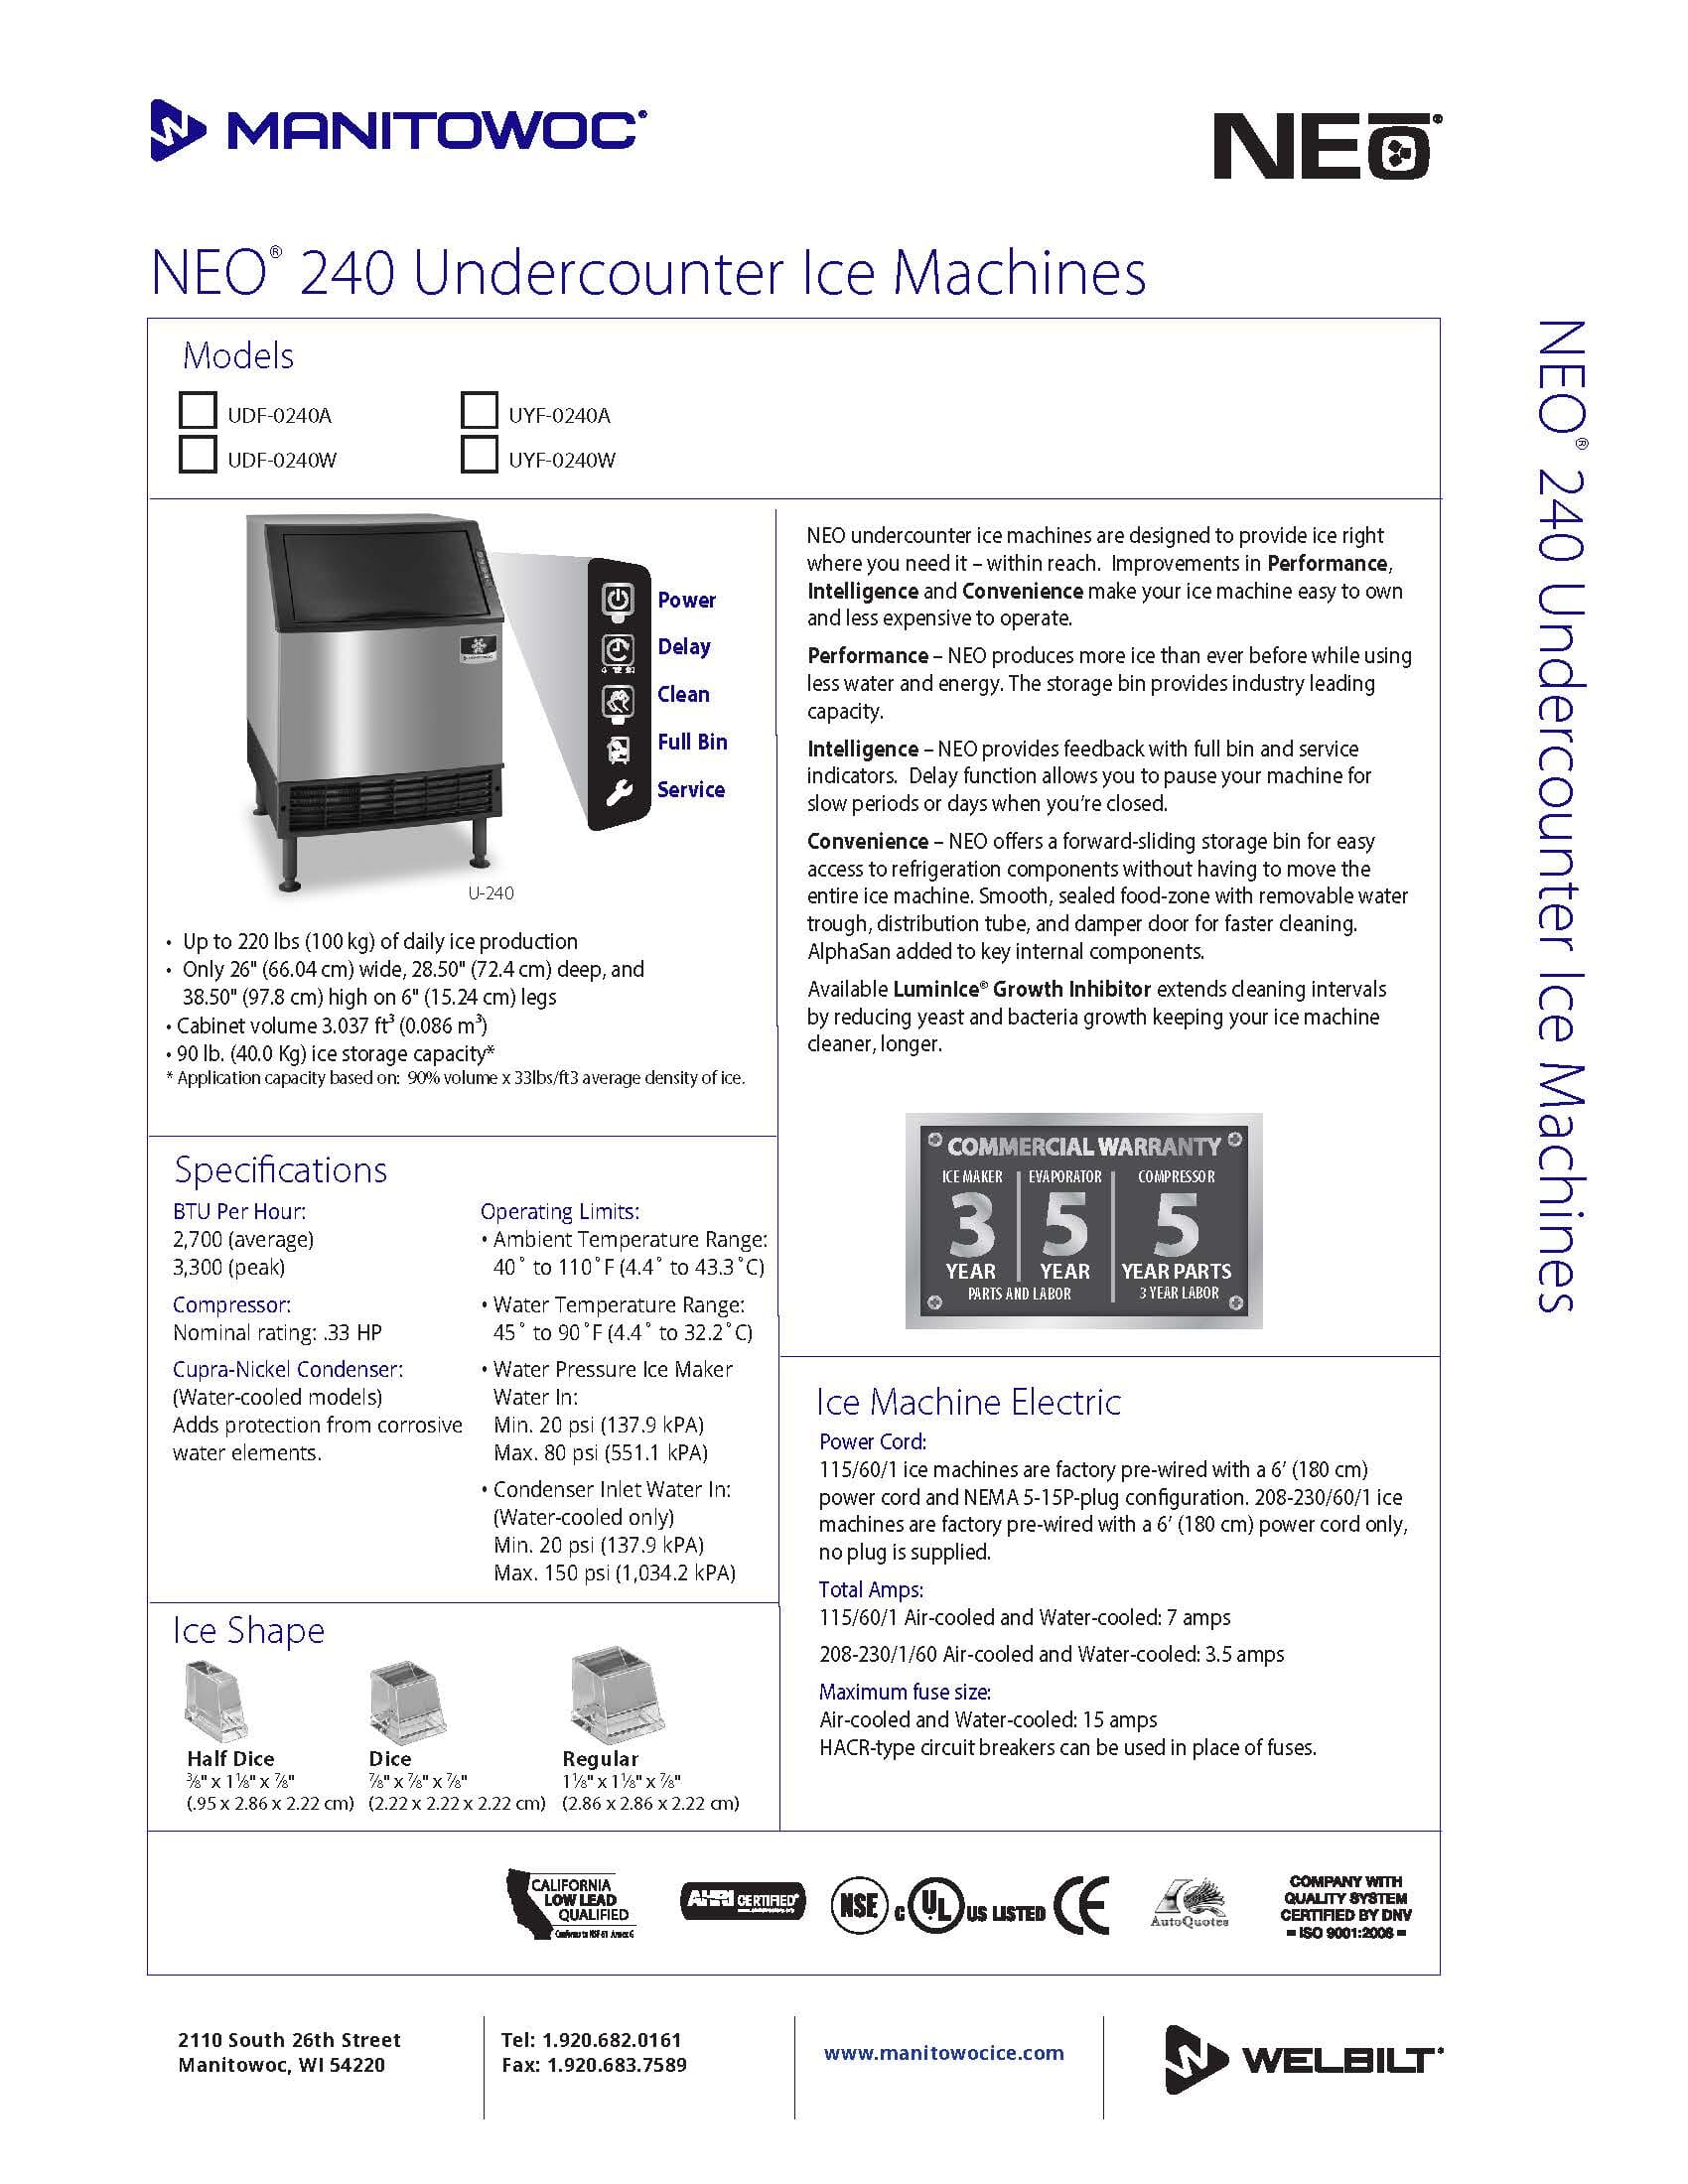 Manitowoc UYF0240A 219lb NEO Series Undercounter Half Dice Ice Machine Manitowoc 